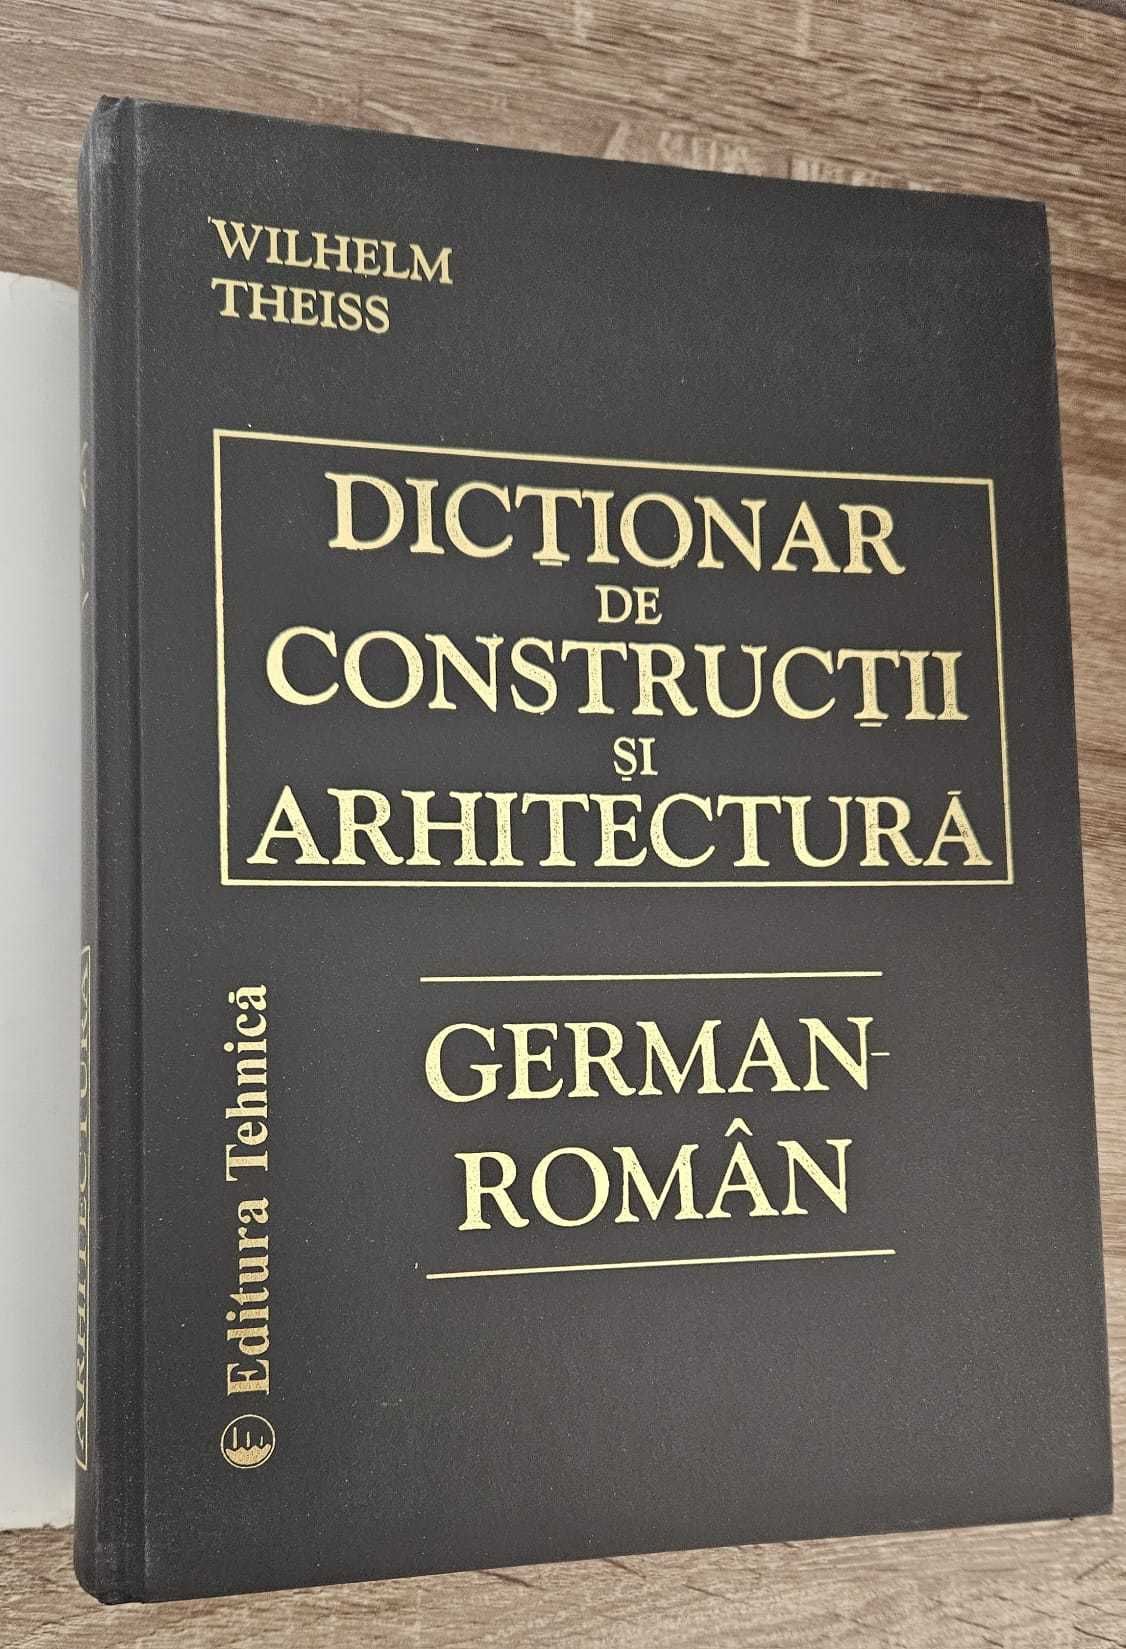 Dictionar de Constructii si Arhitectura German-Roman